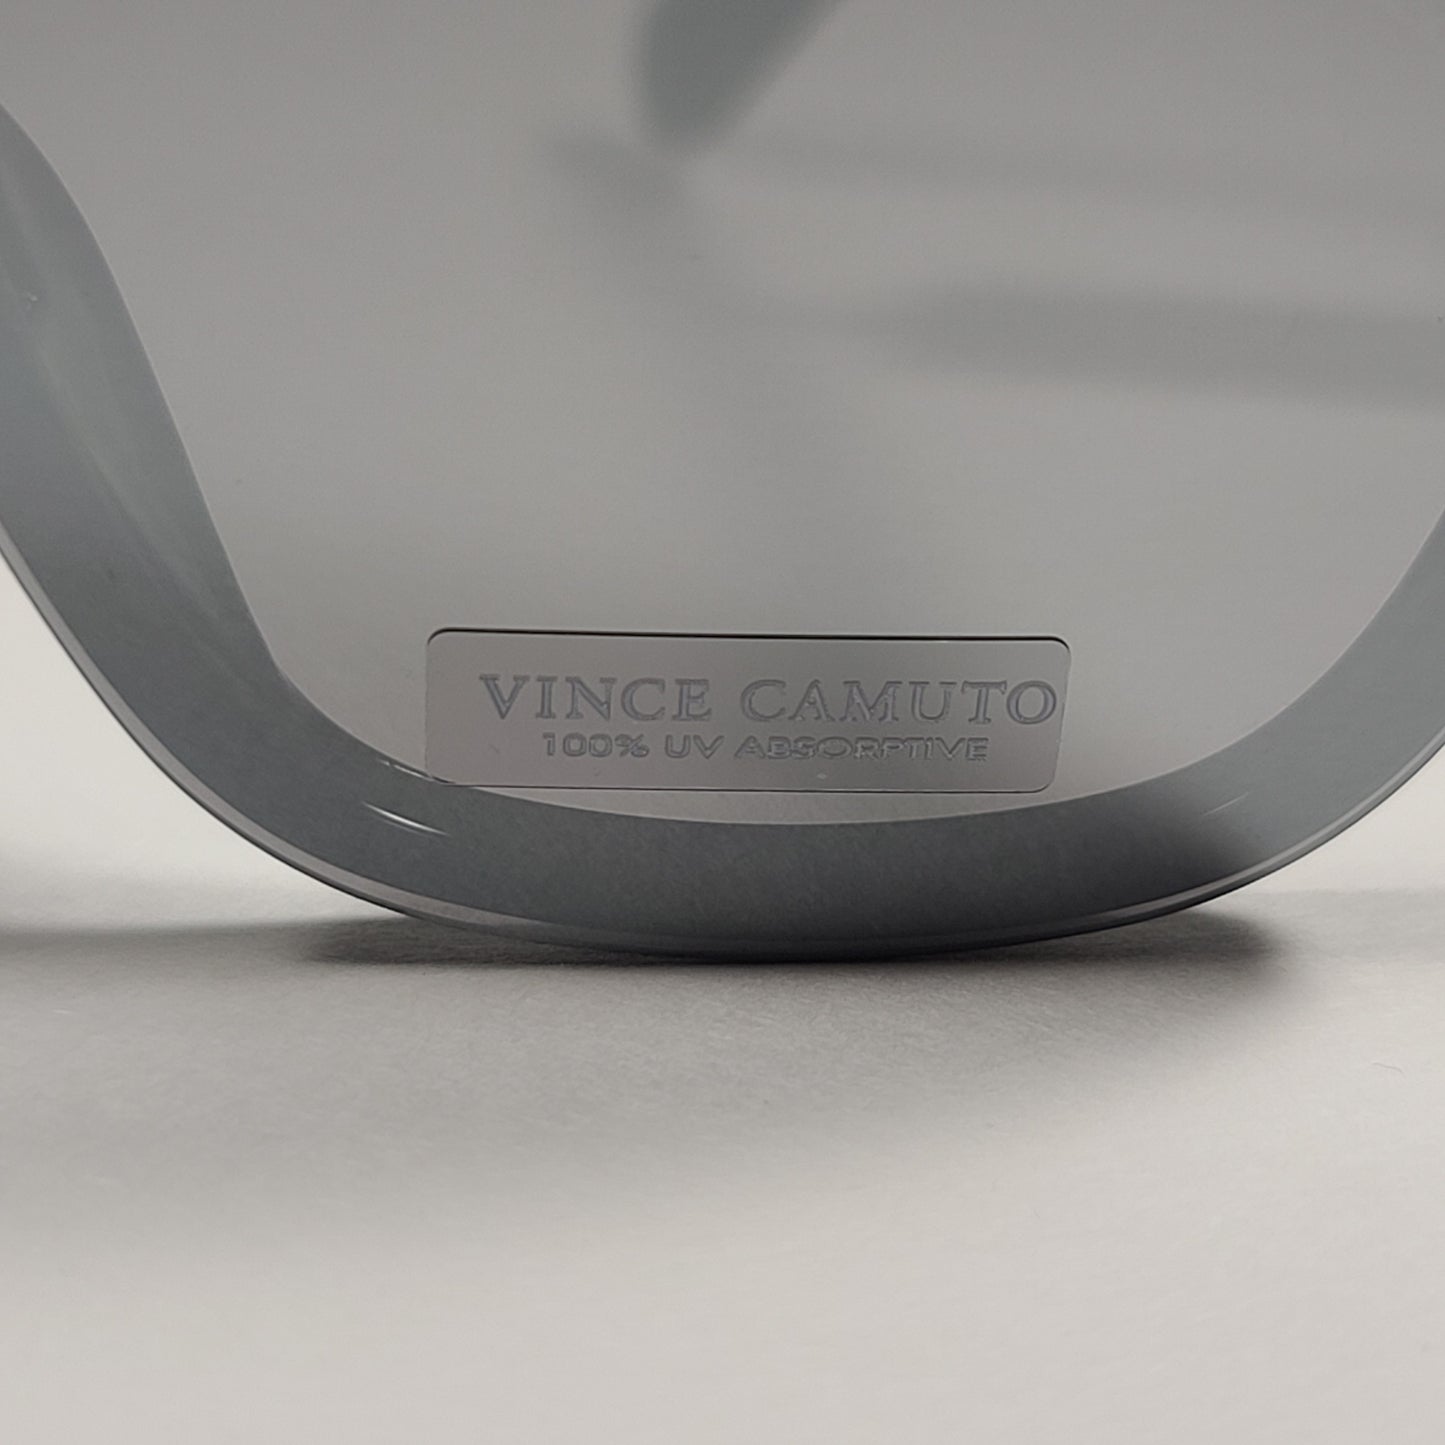 Vince Camuto VC907 OX Rimless Cat Eye Sunglasses Shiny Black Gray Mirror Flash Lens - Sunglasses